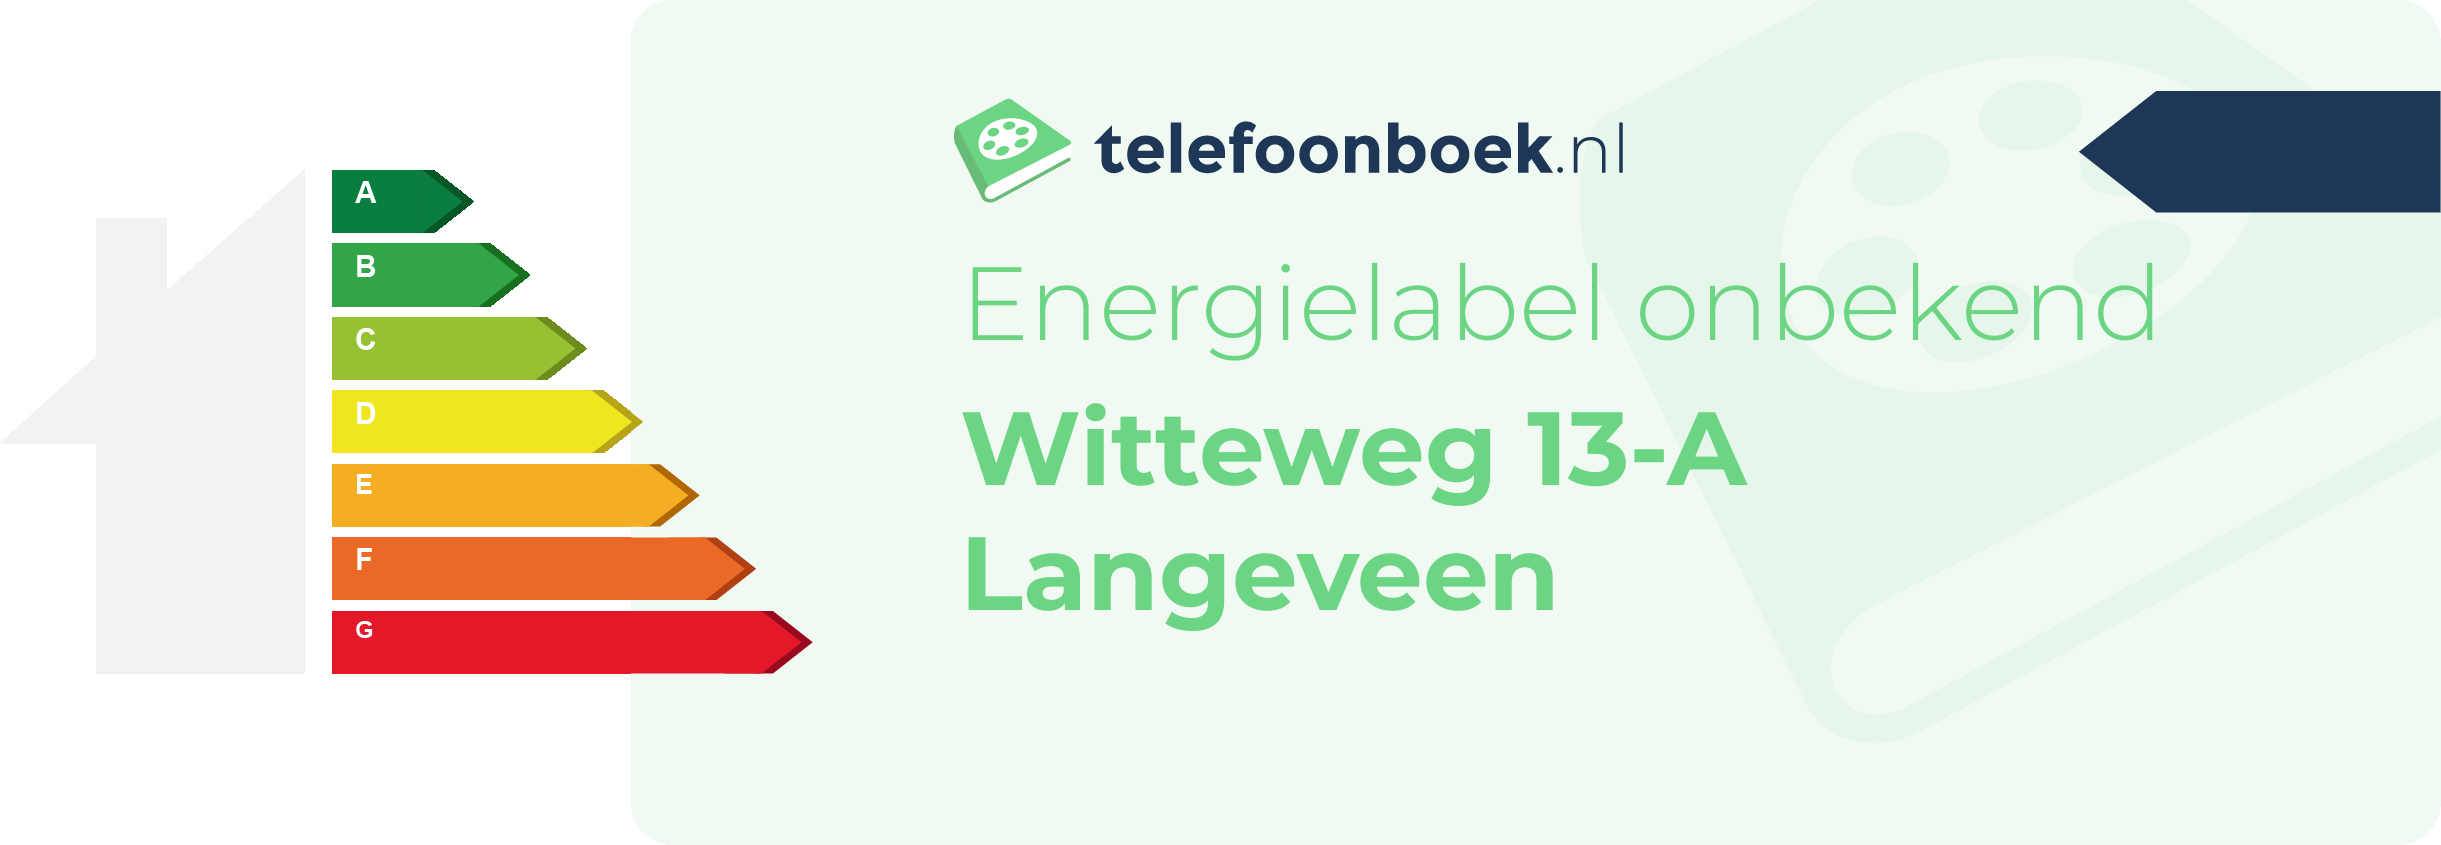 Energielabel Witteweg 13-A Langeveen